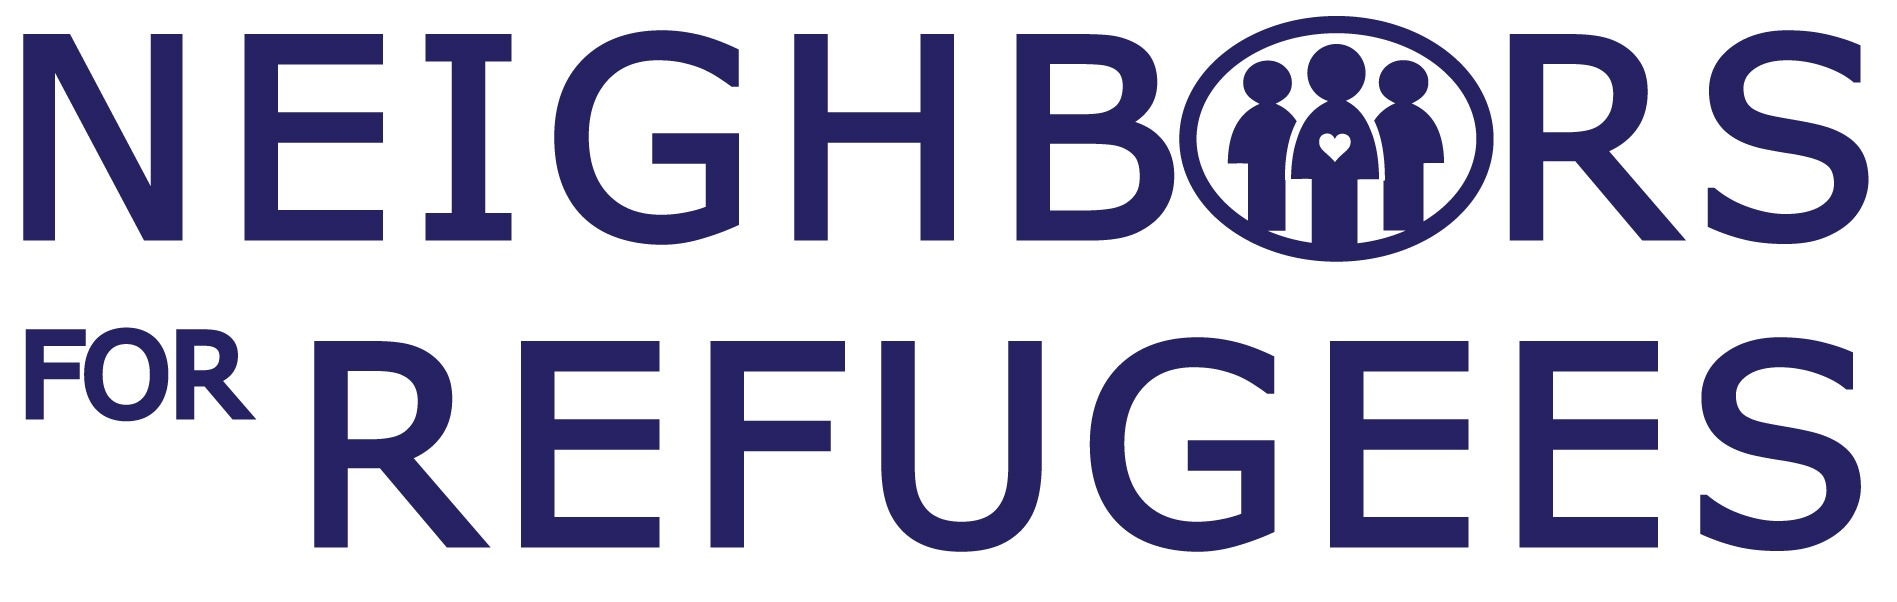 Neighbors For Refugees logo